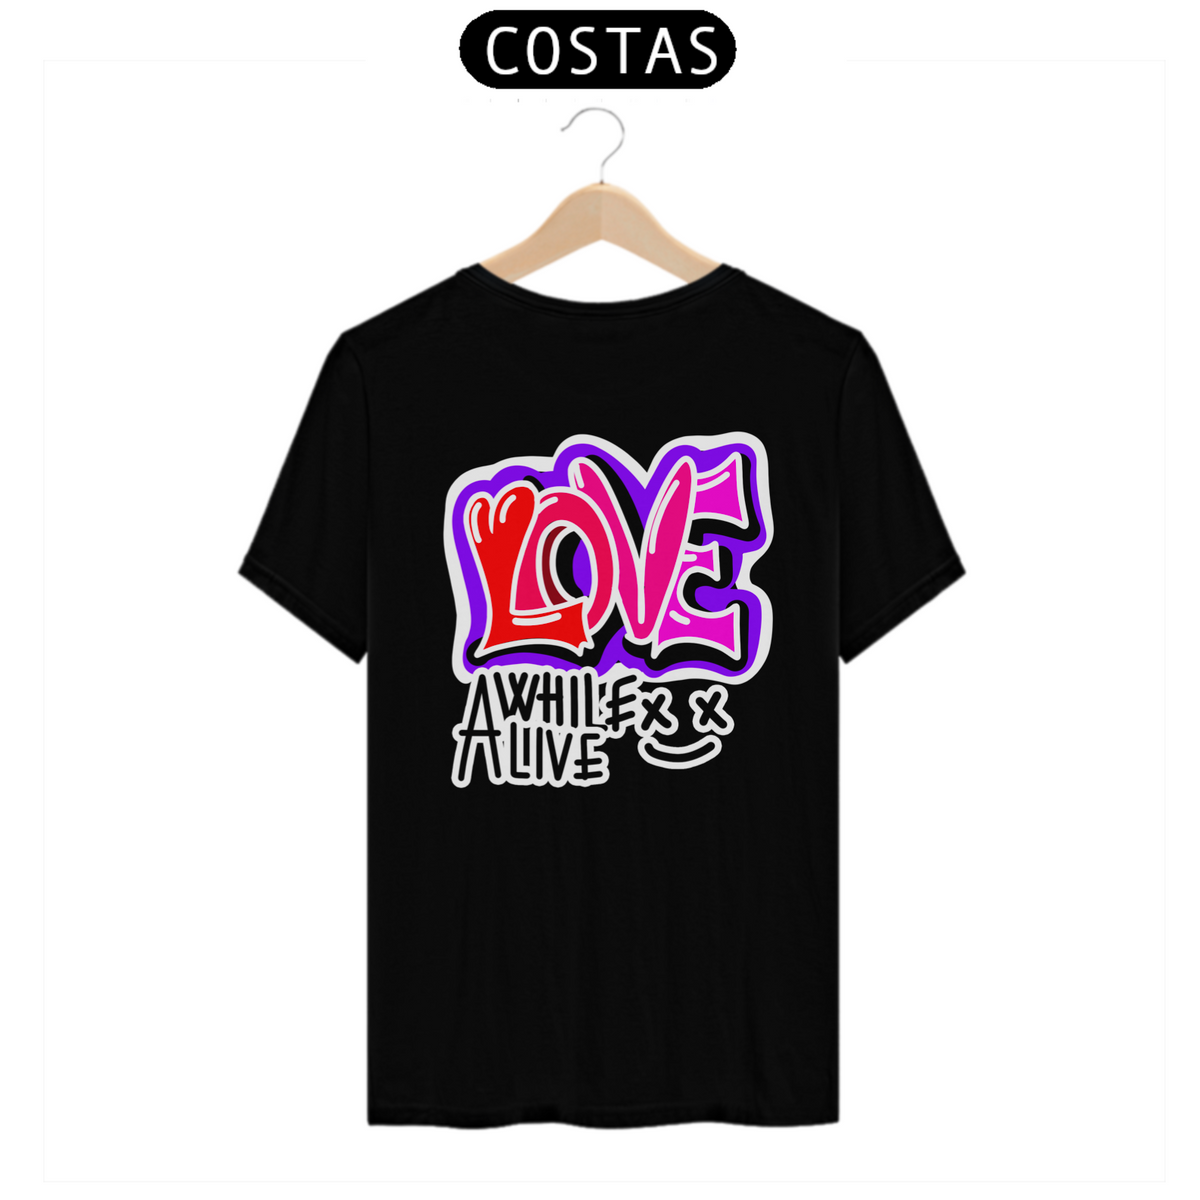 Nome do produto: LOVE WHILE ALIVE - Costas